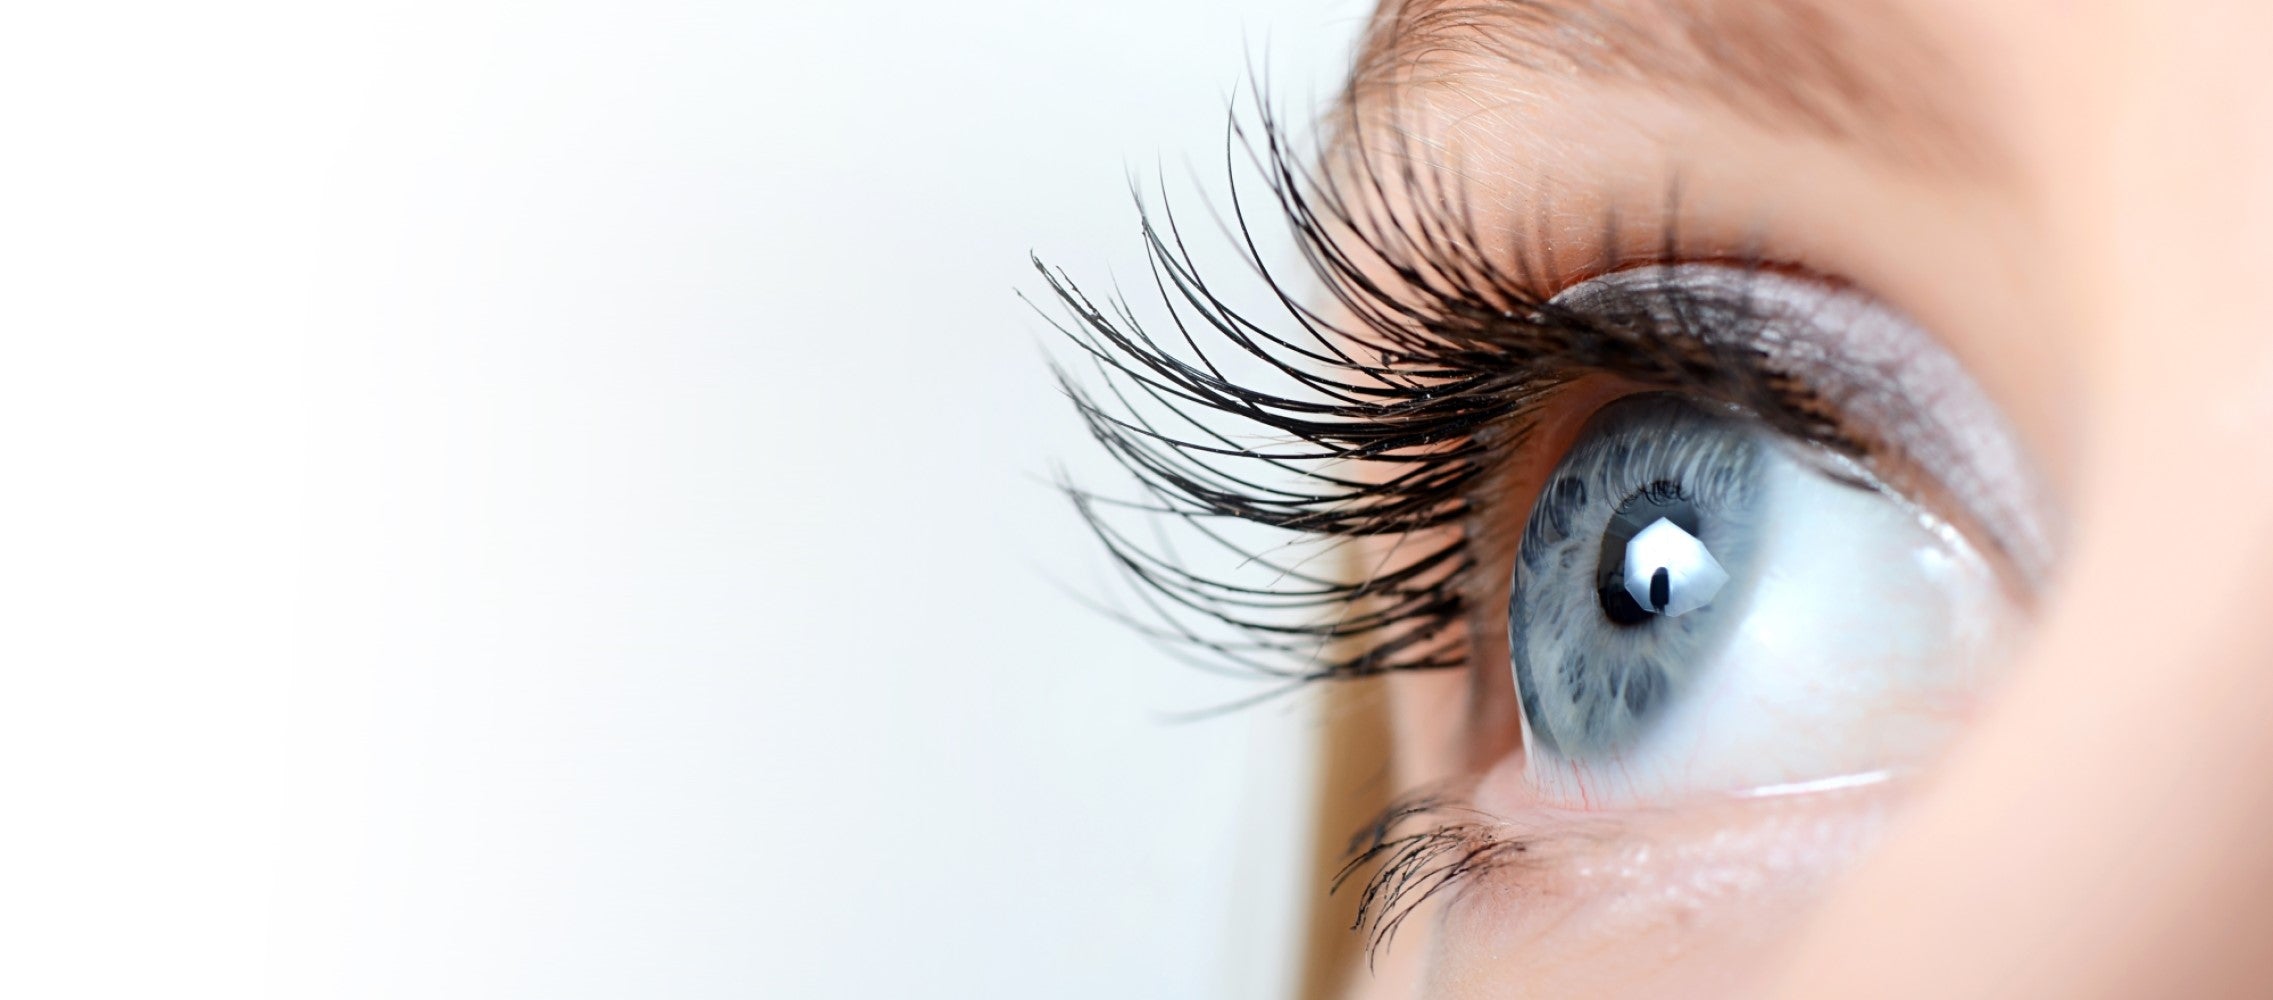 Dermaworks Eyelash growth, grow long, thick lashes